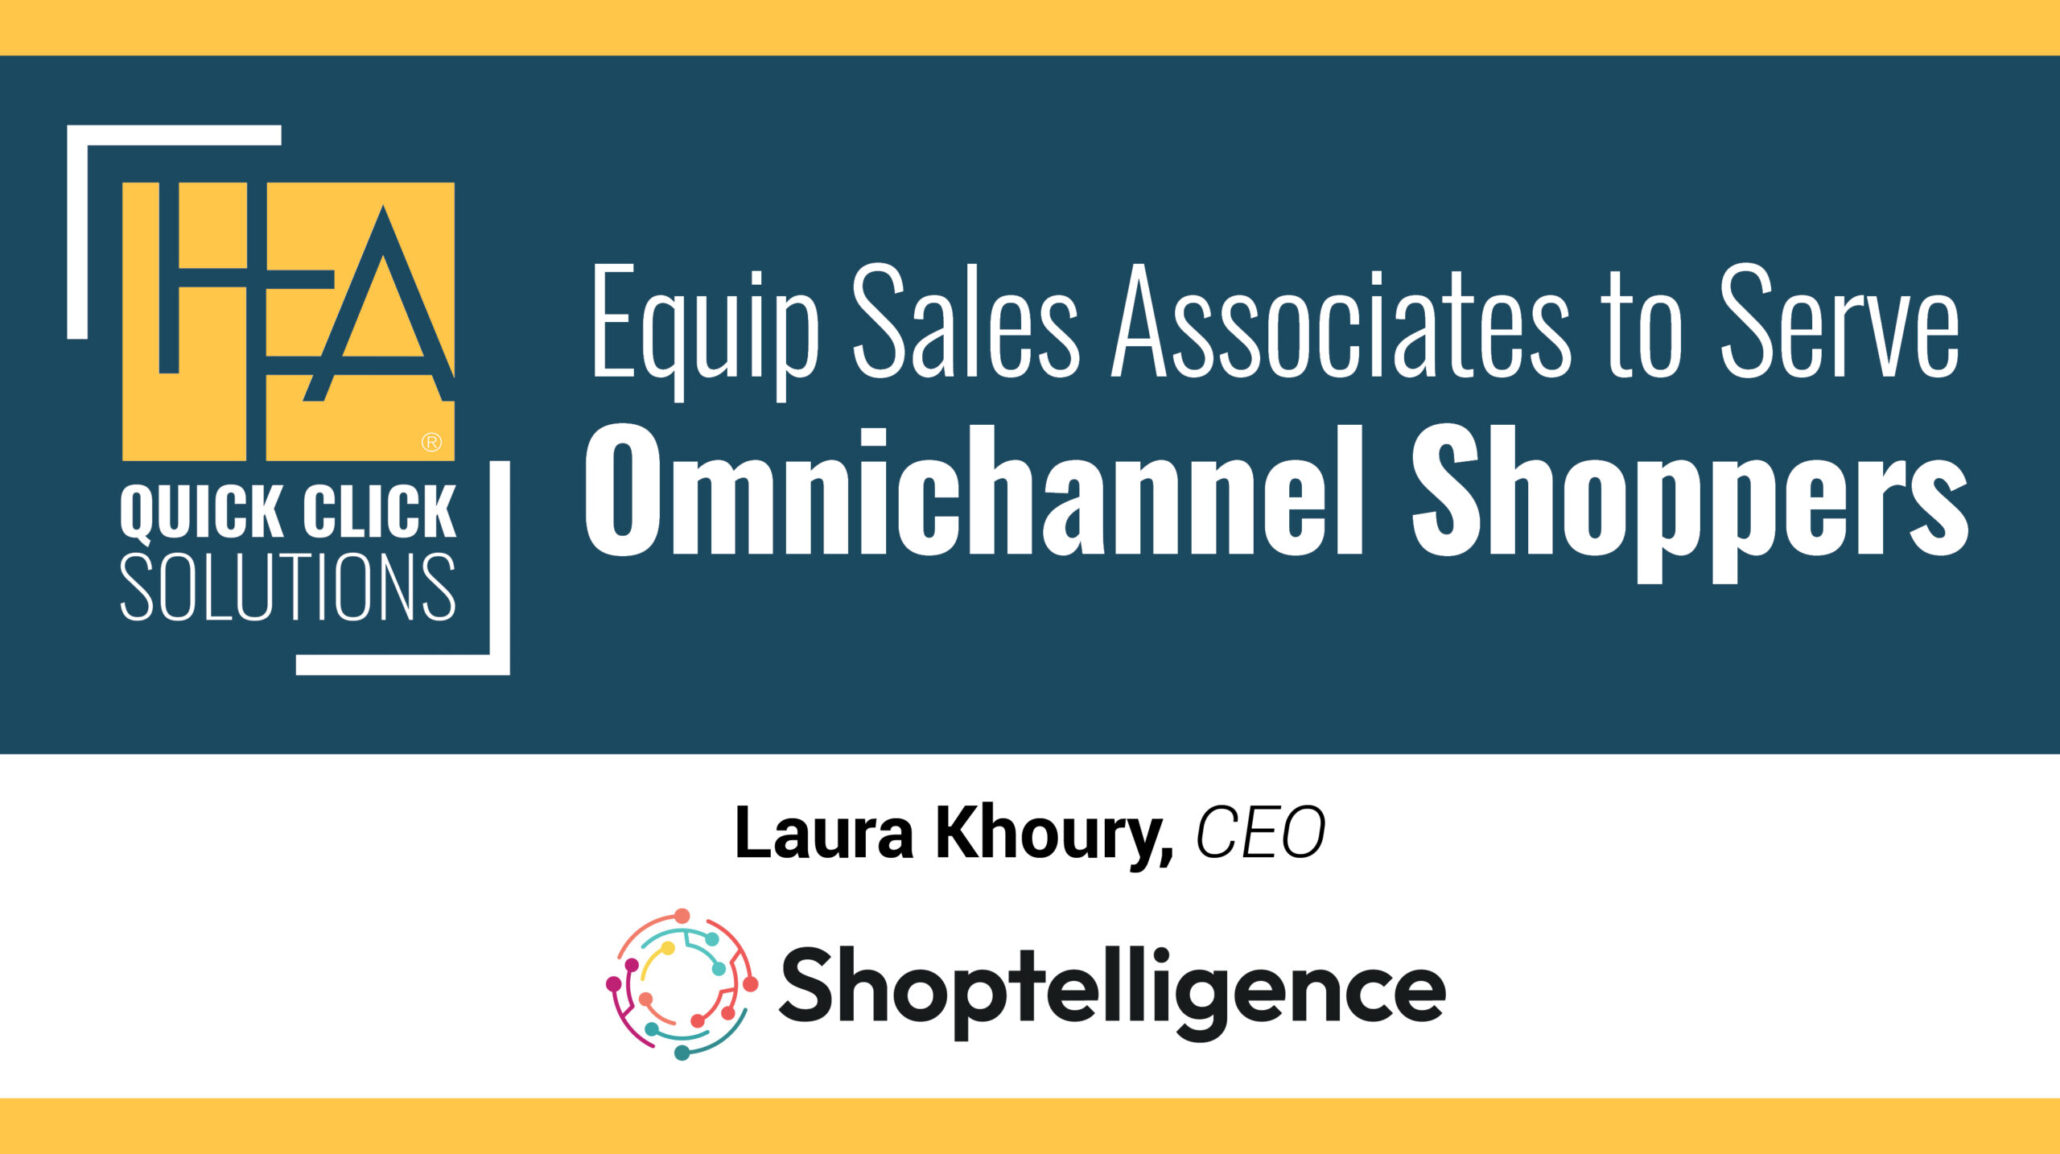 HFA_QCS-Equip Sales Associates to Serve Omnichannel Shoppers